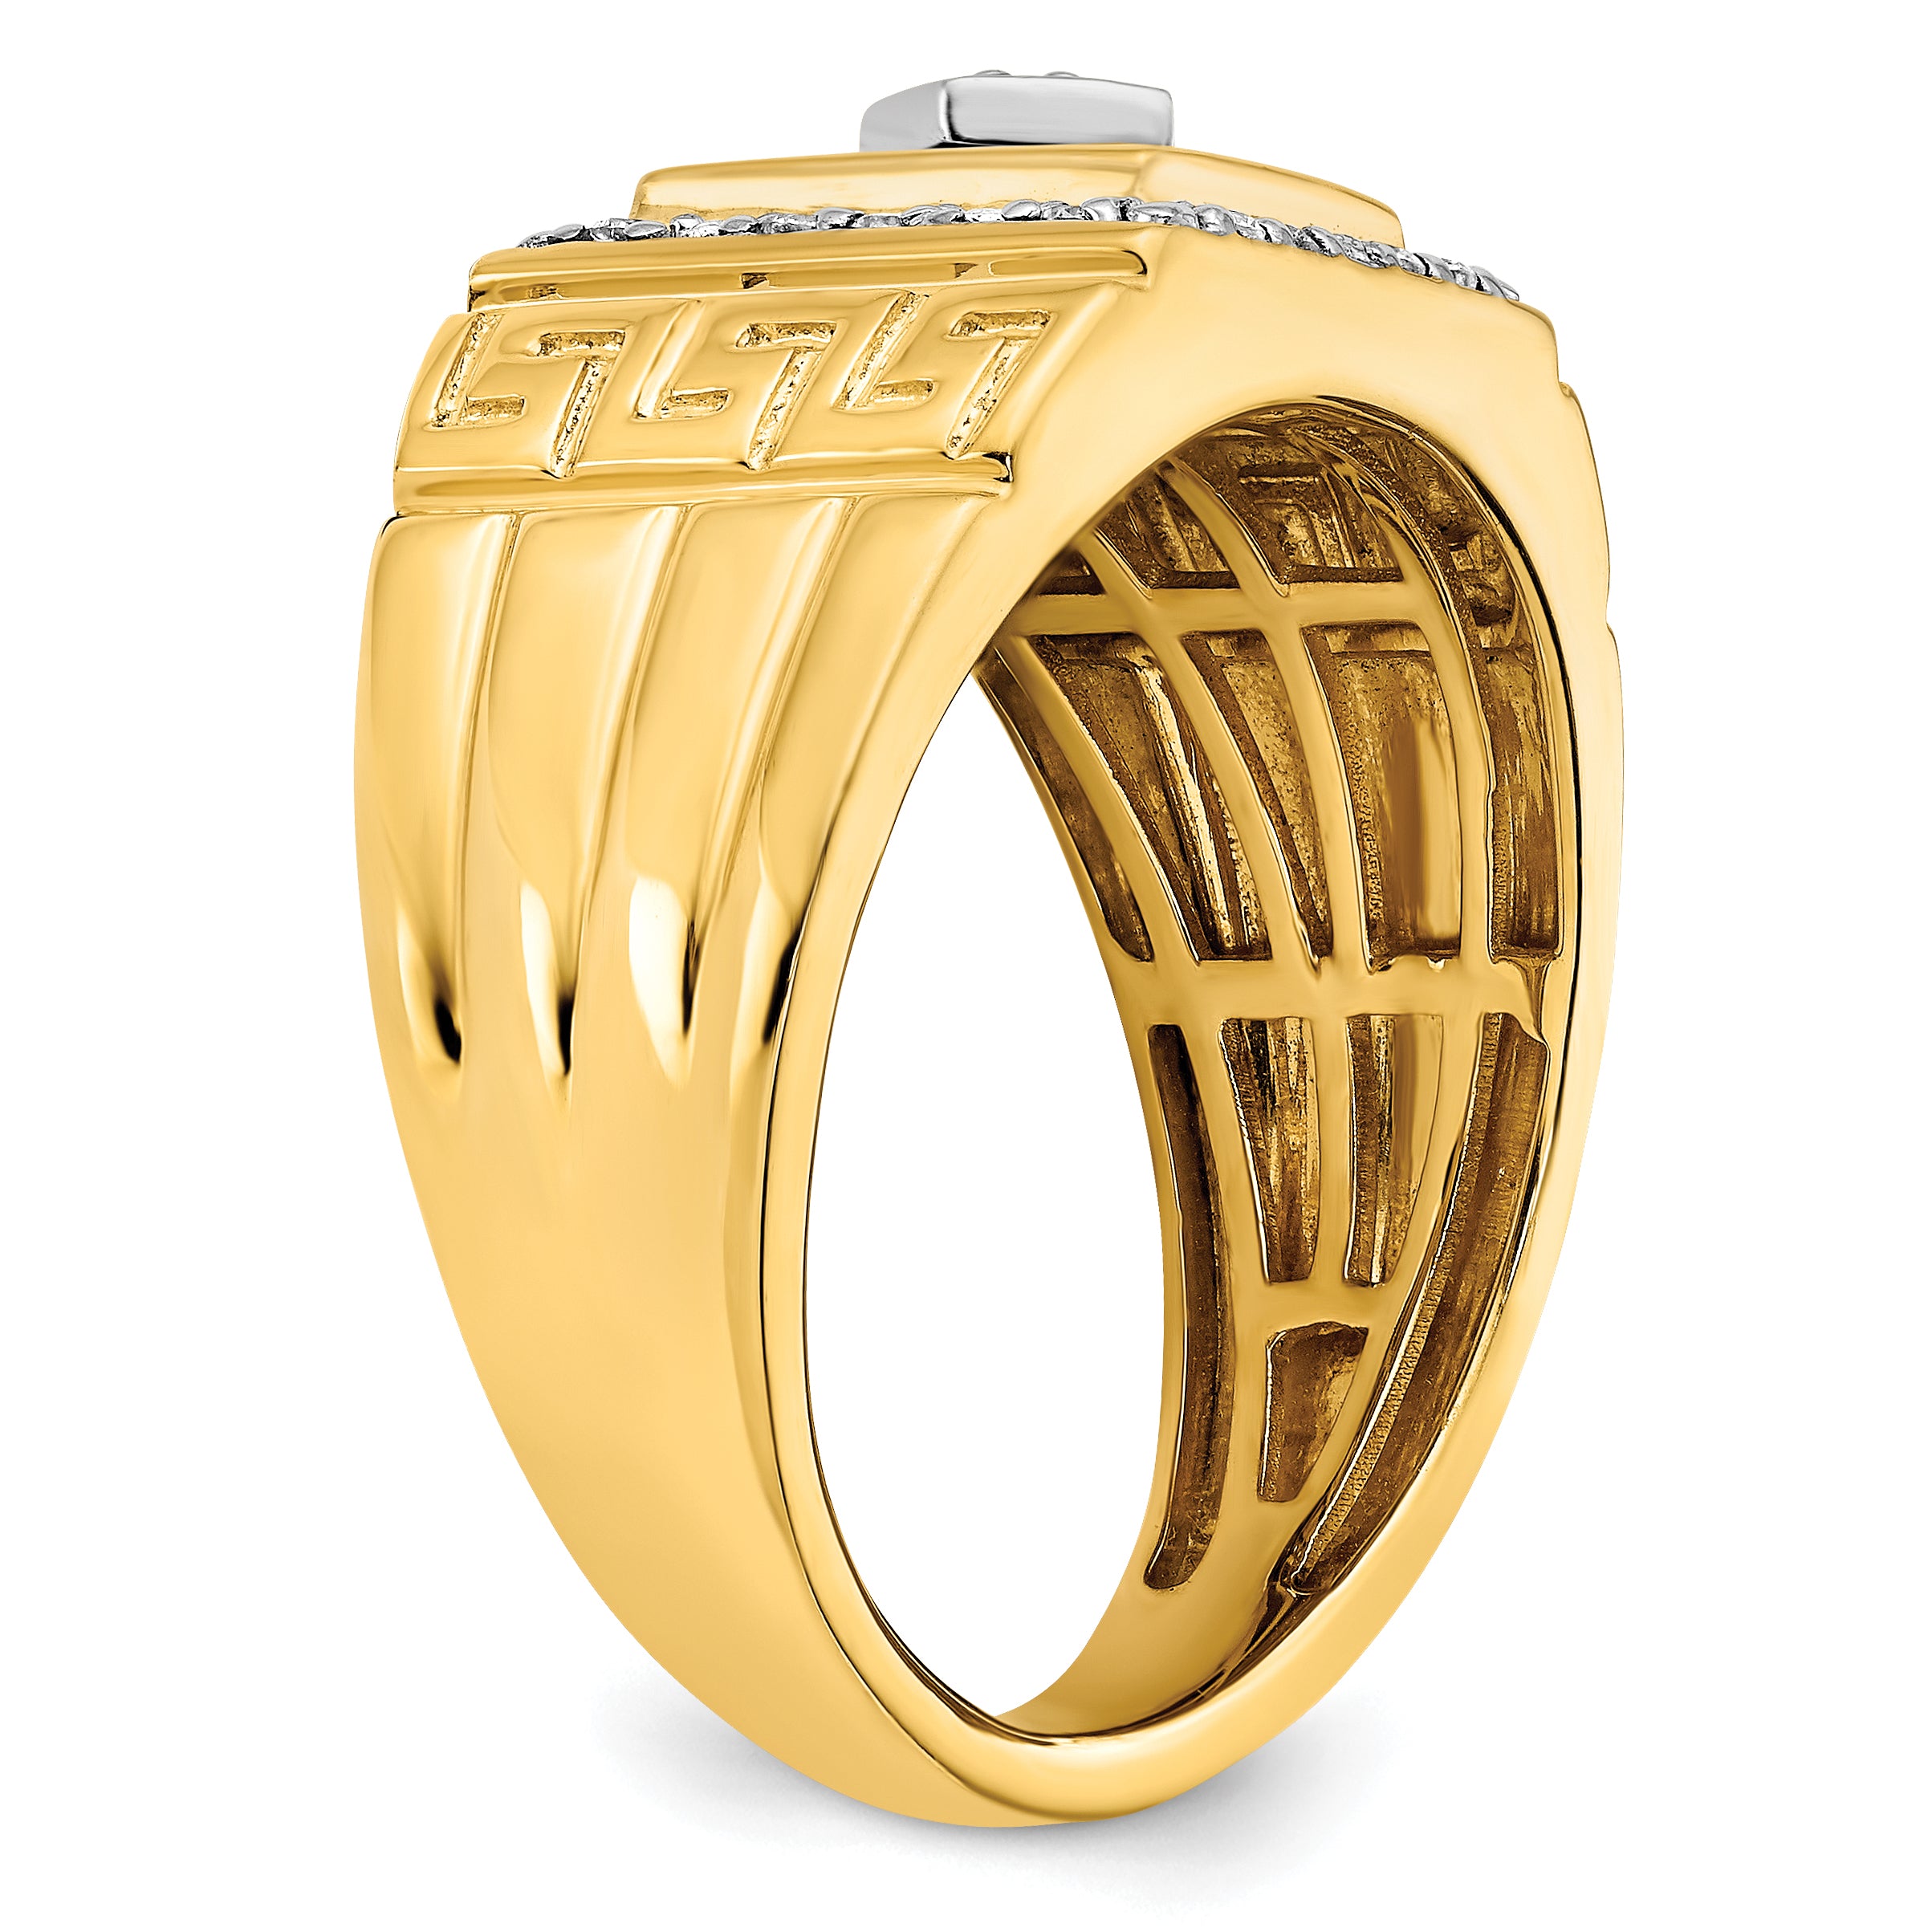 14K Lab Grown Diamond and Onyx Greek Key Design Men's Ring